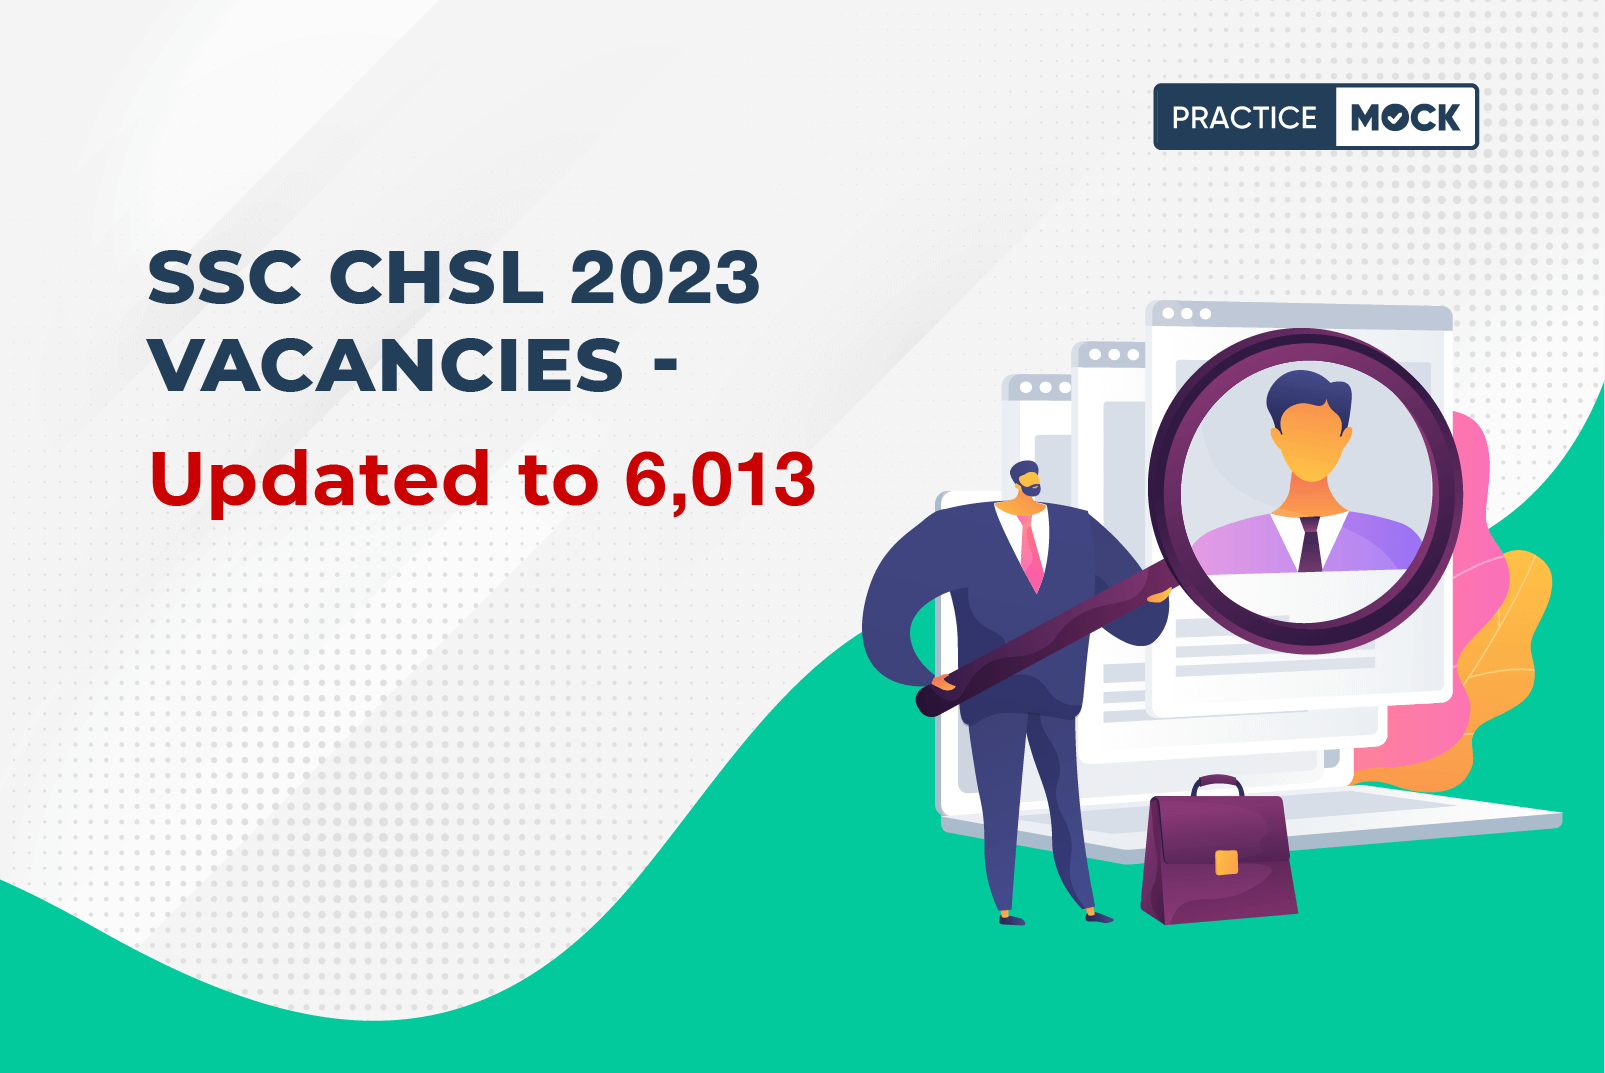 SSC CHSL 2023 Vacancies- Updated to 6,013